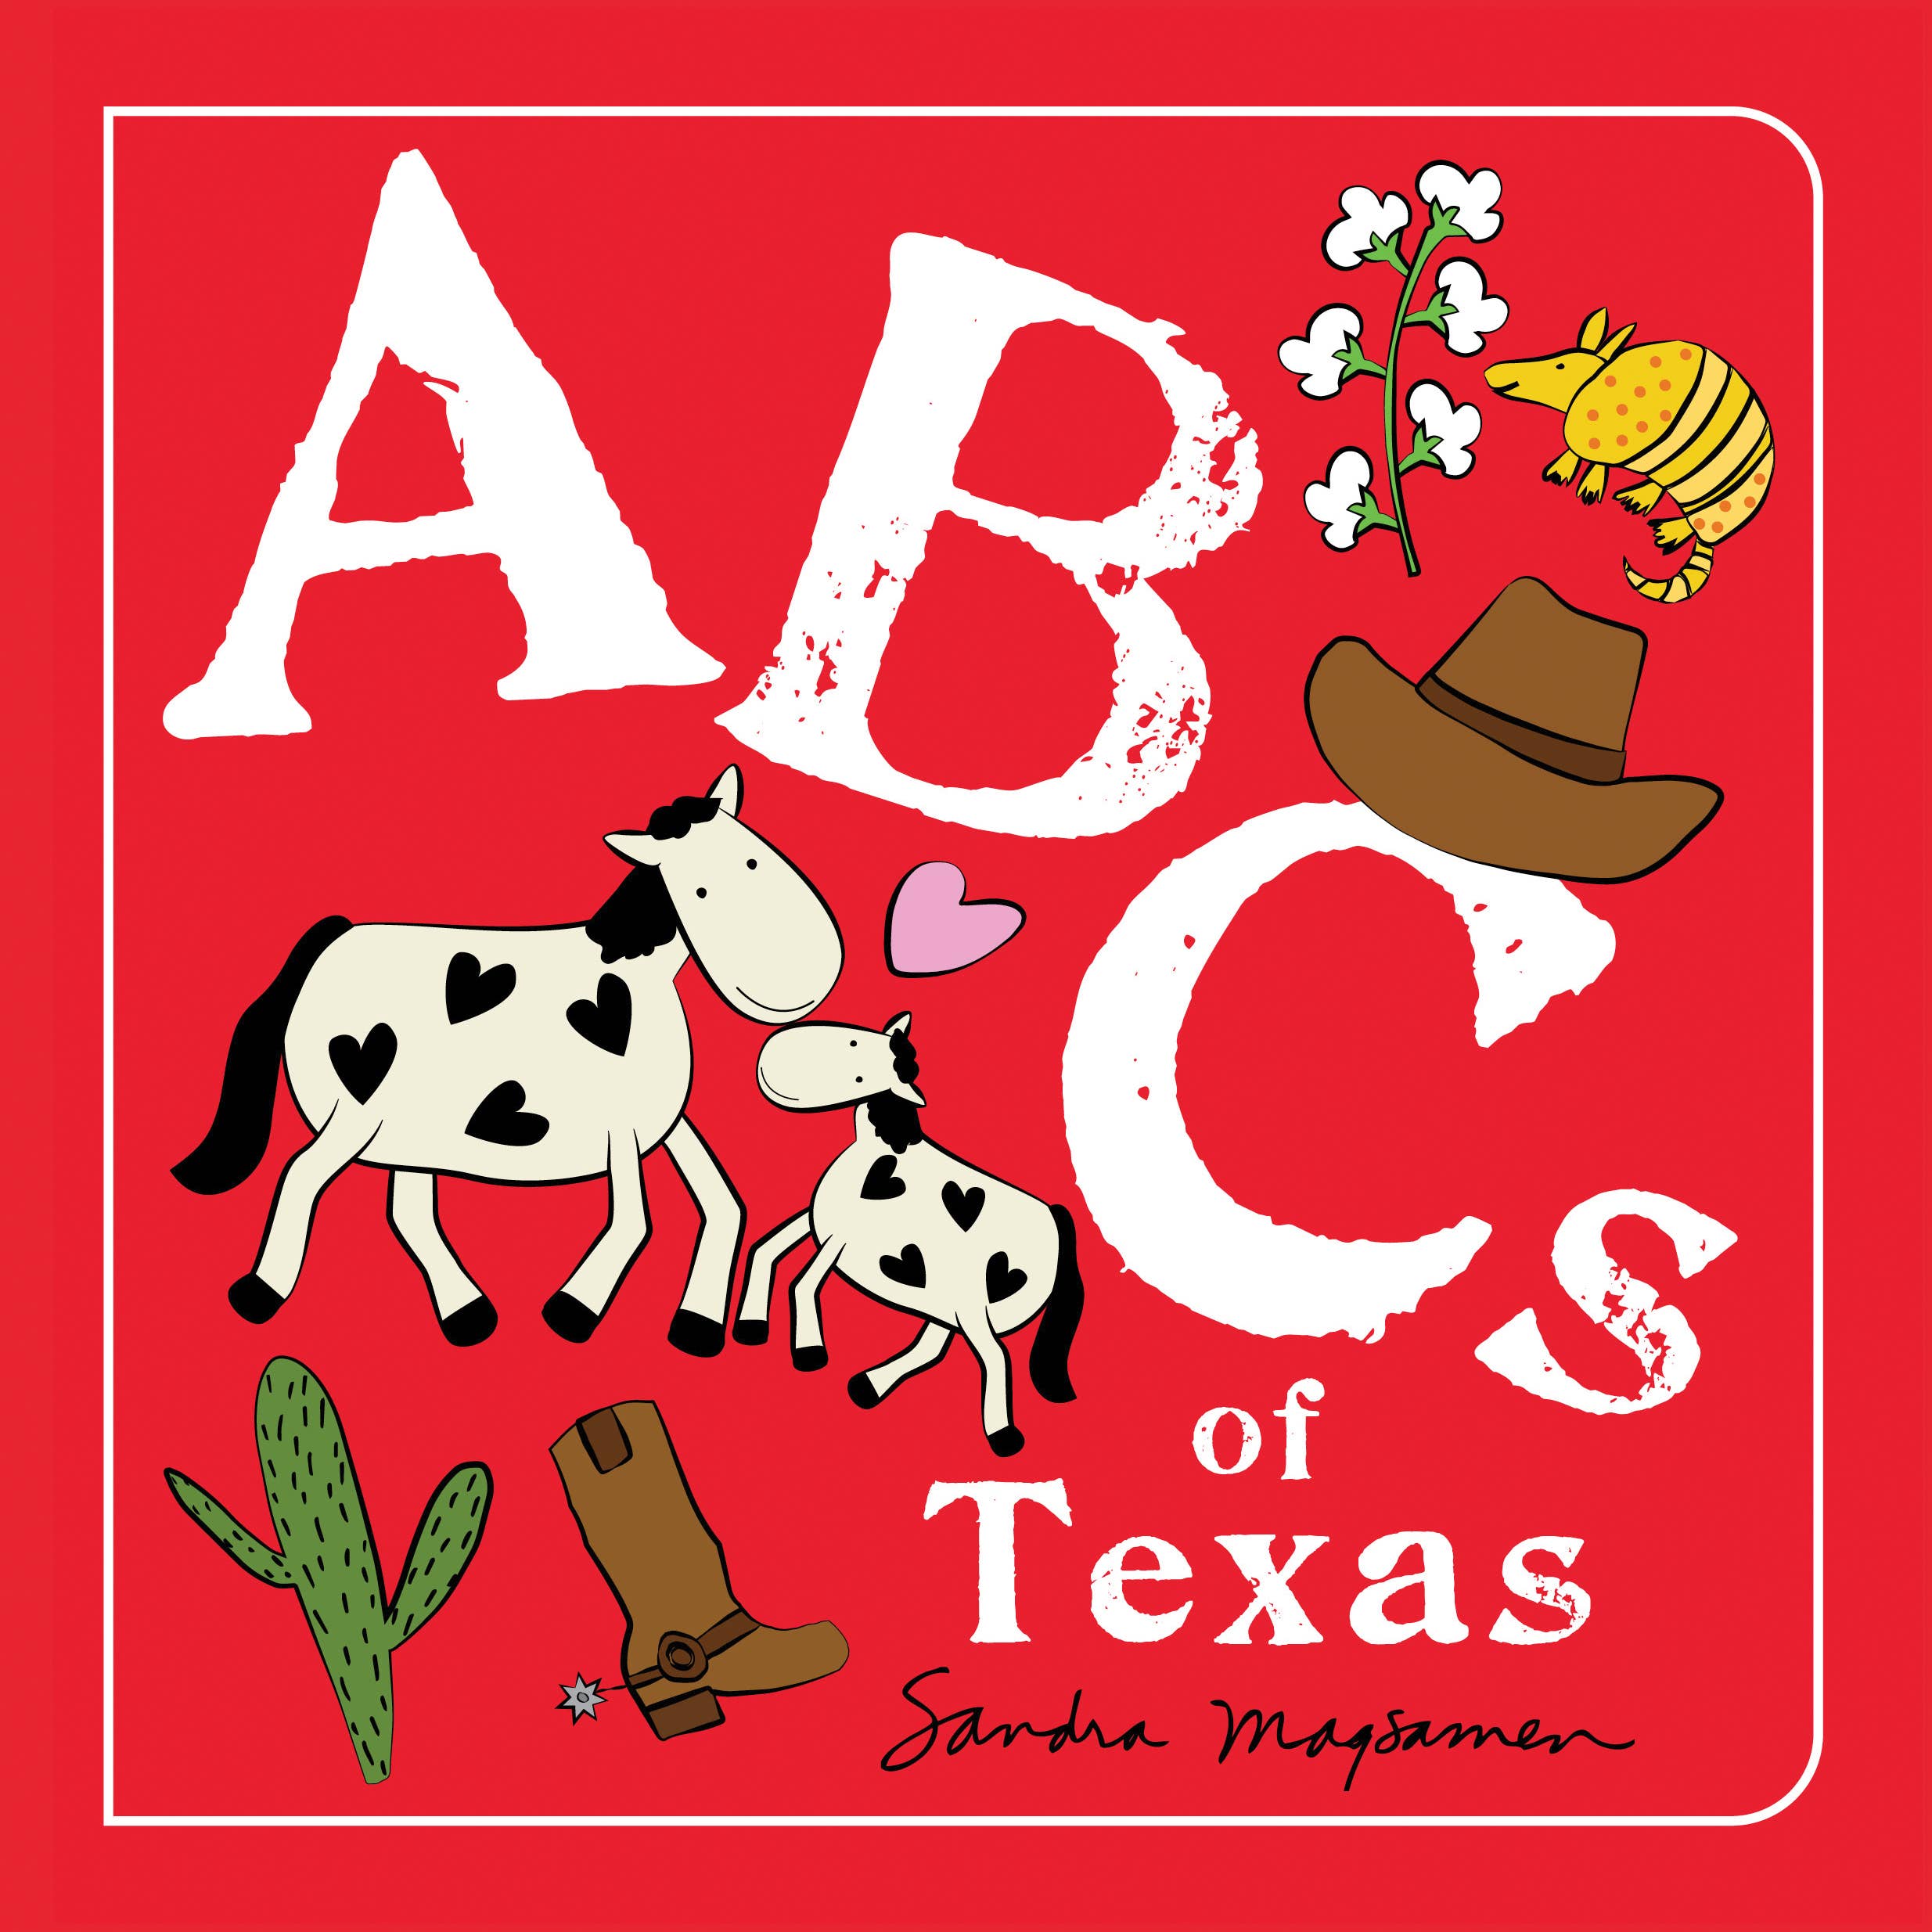 ABCs of Texas Book